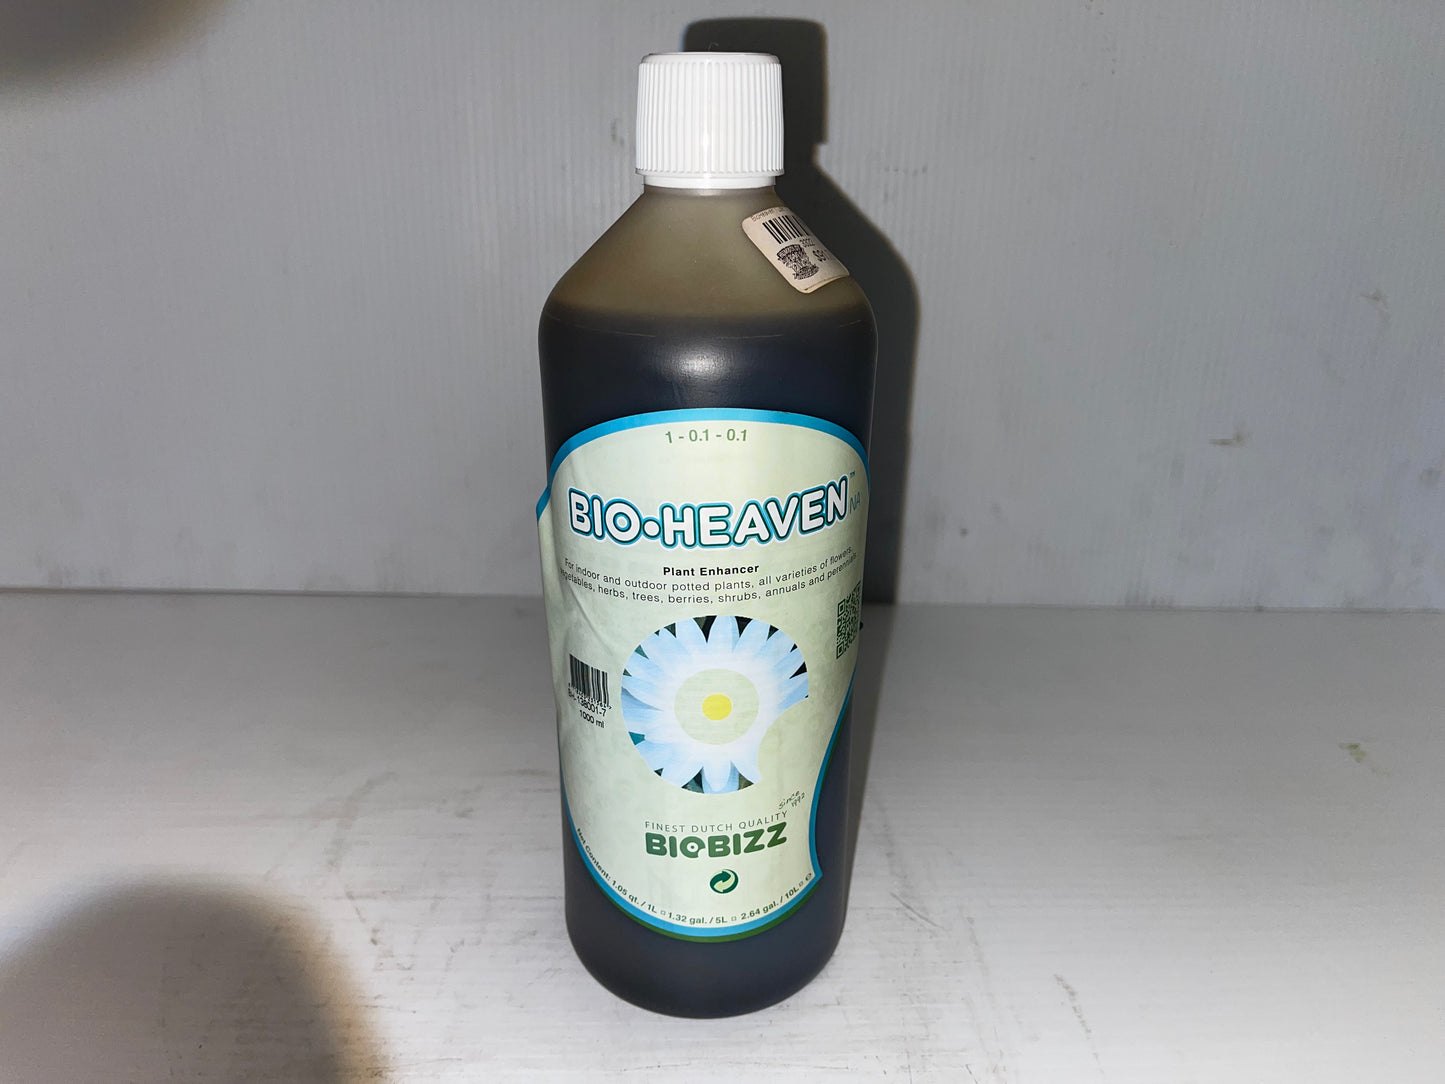 Biobizz Bio-Heaven 1 Liter